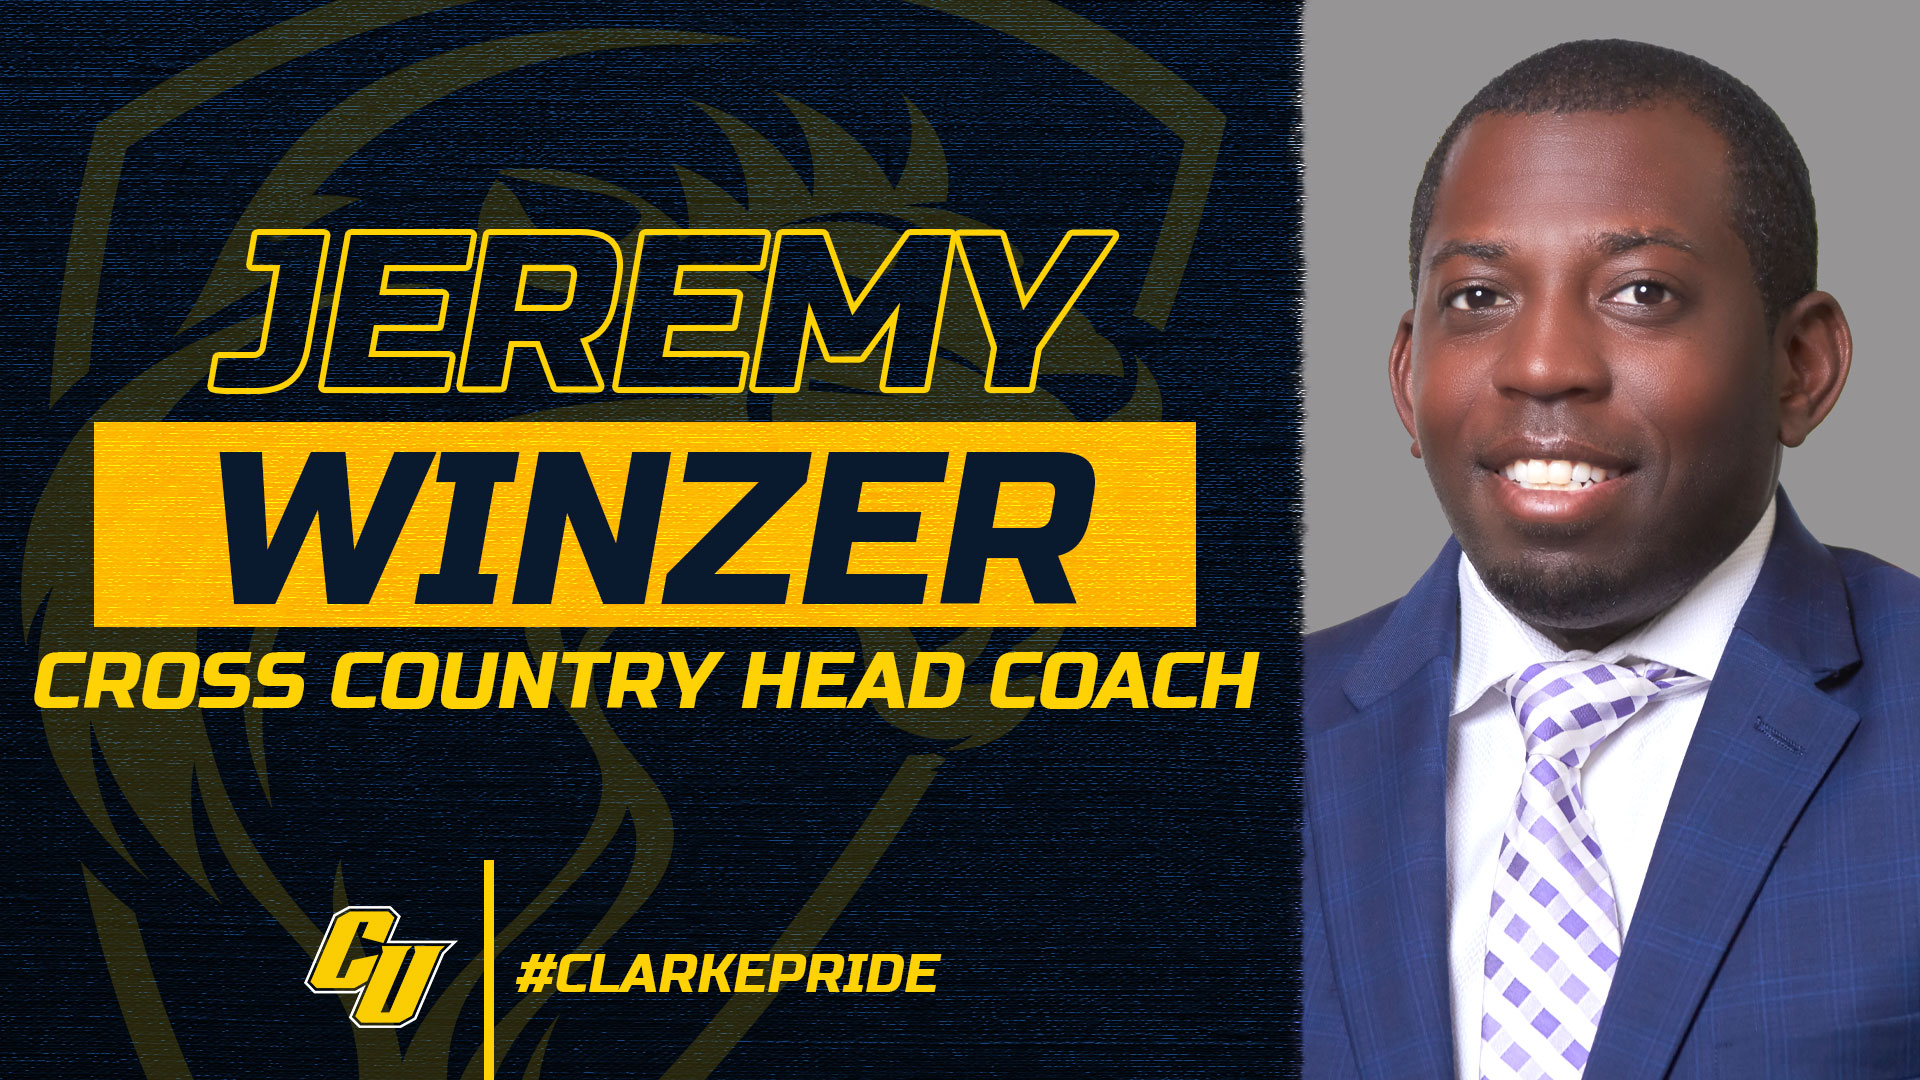 Jeremy Winzer begins tenure as Pride cross country head coach